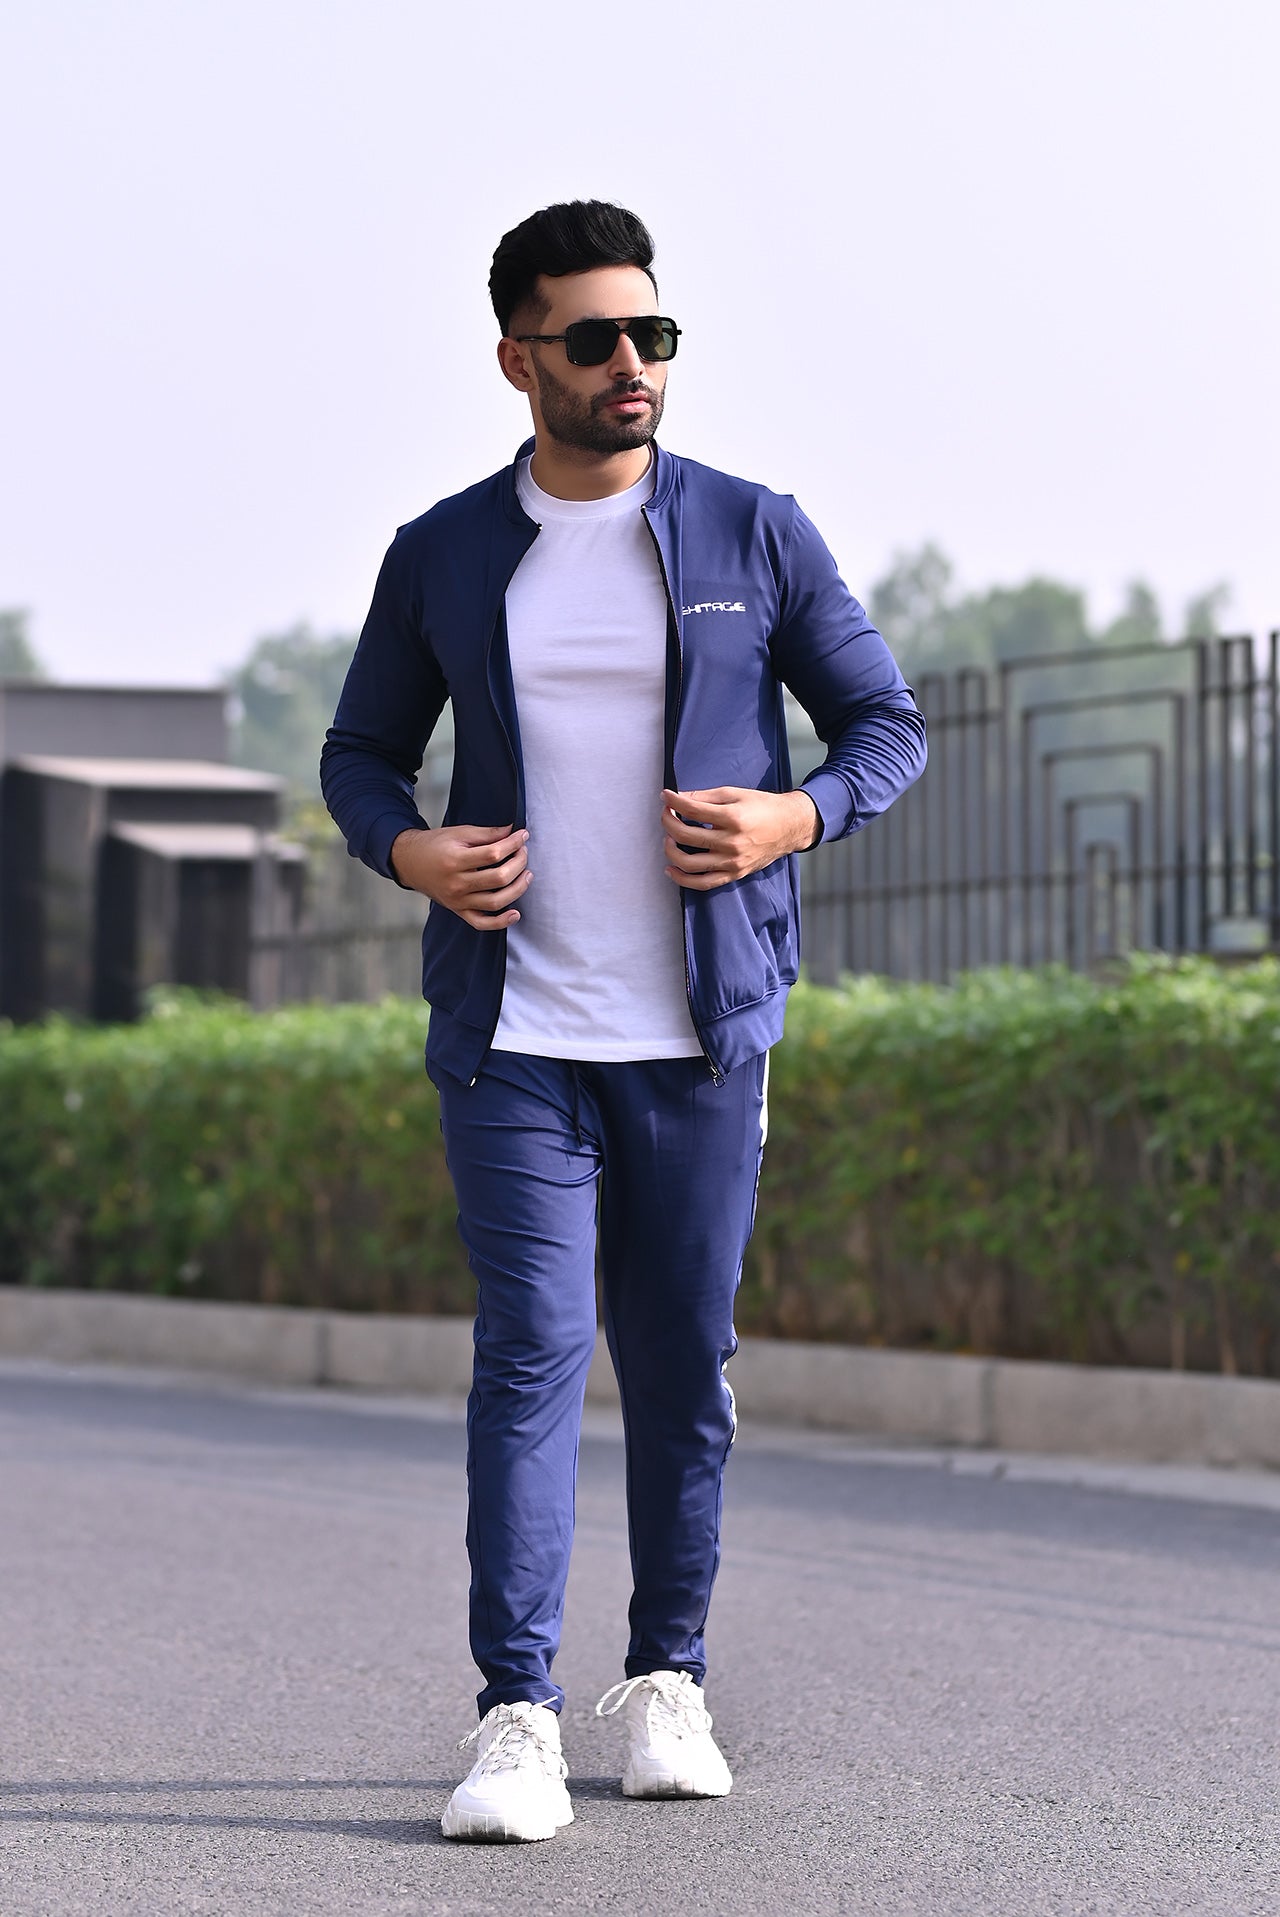 Nextage men clothing brands in pakistan, Activewear tracksuit for men,